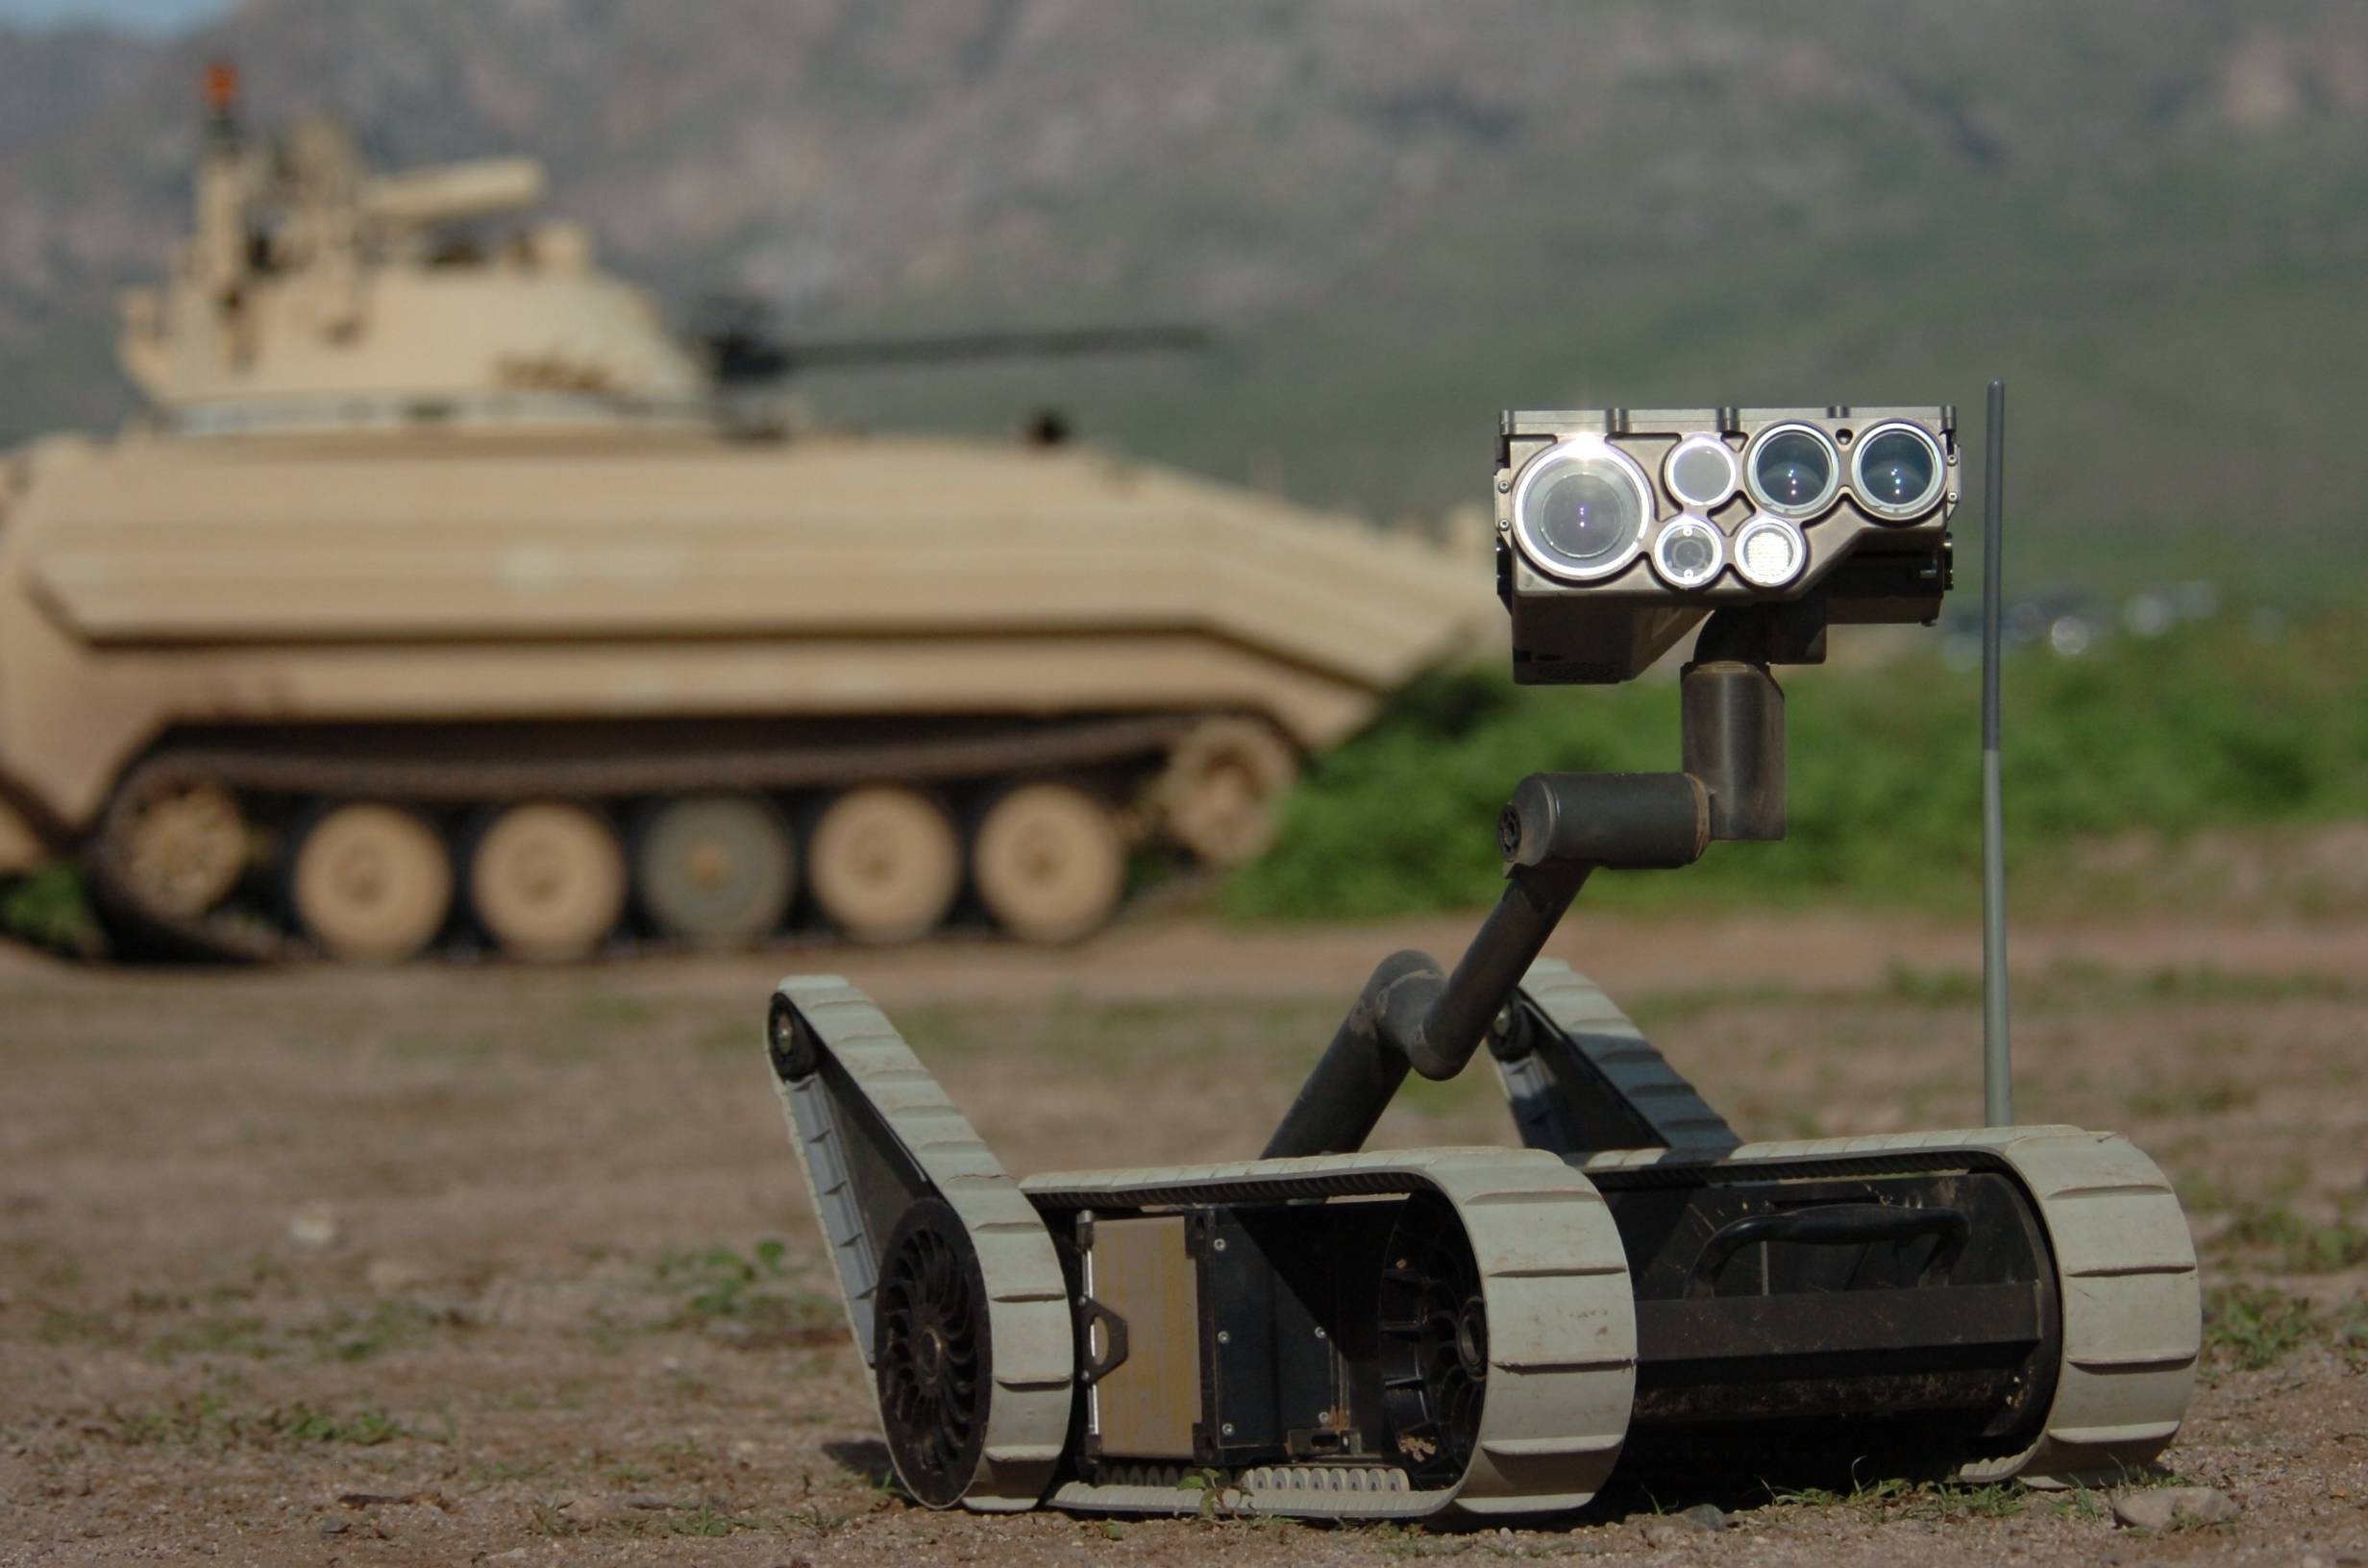 Remote Control Army Robot